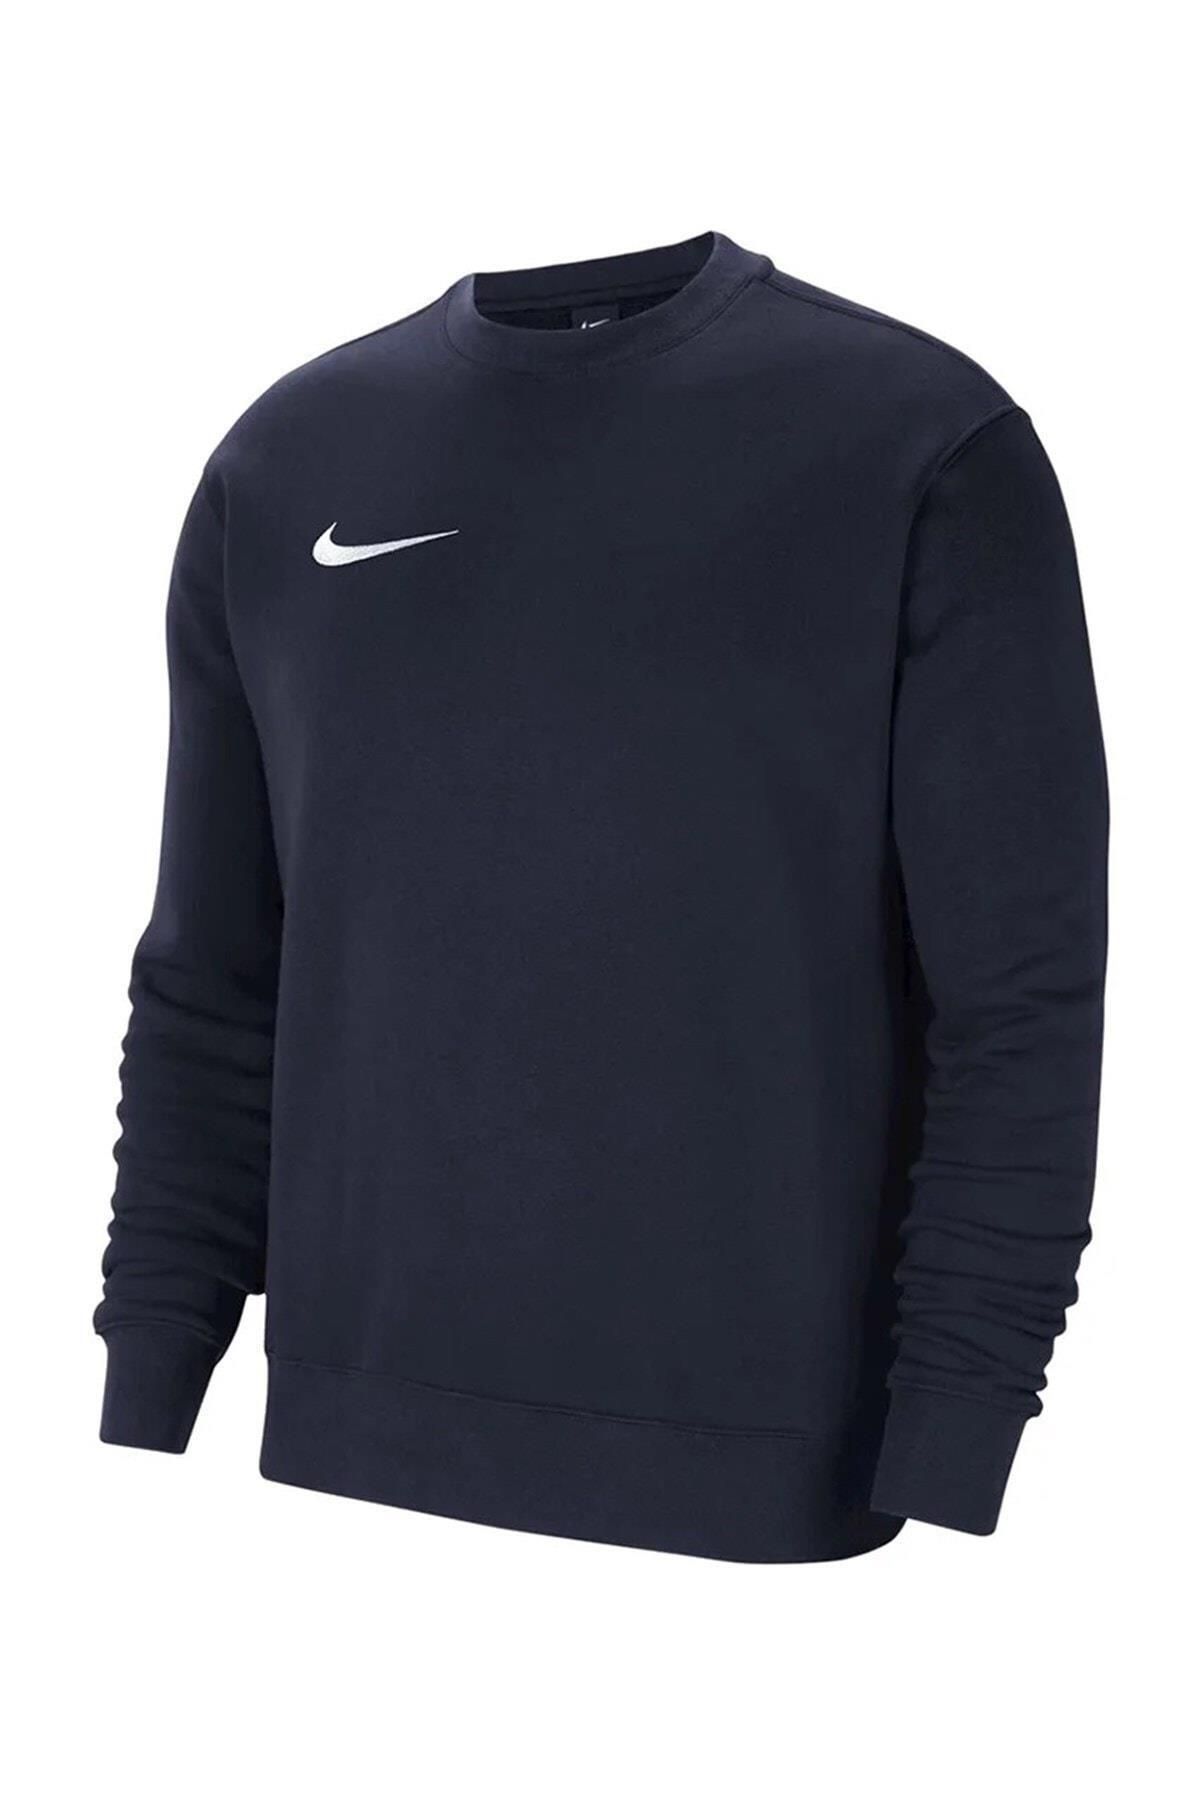 Nike M Nk Flc Park20 Crew Cw6902-451 Erkek Lacivert Sweatshirt